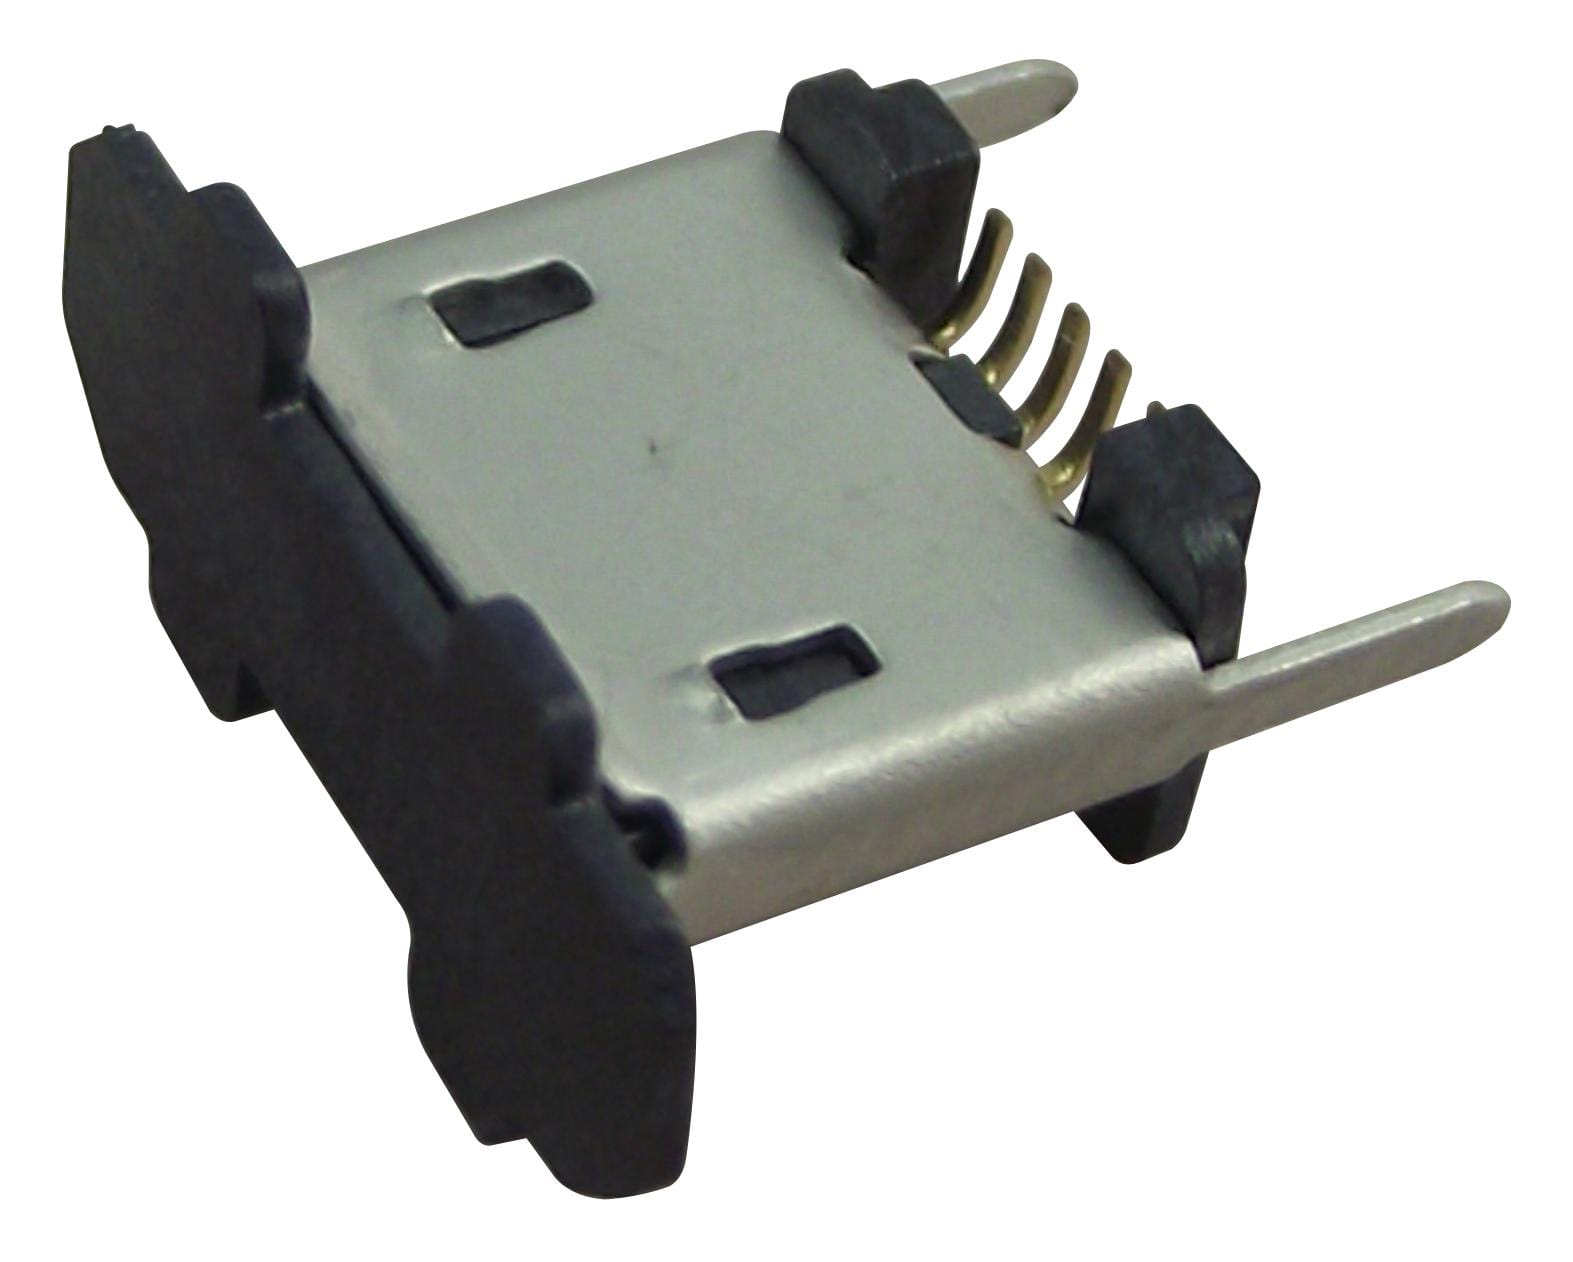 USB3140-30-0230-1-C MICRO USB, 2.0 TYPE B, RECEPTACLE, SMT GCT (GLOBAL CONNECTOR TECHNOLOGY)